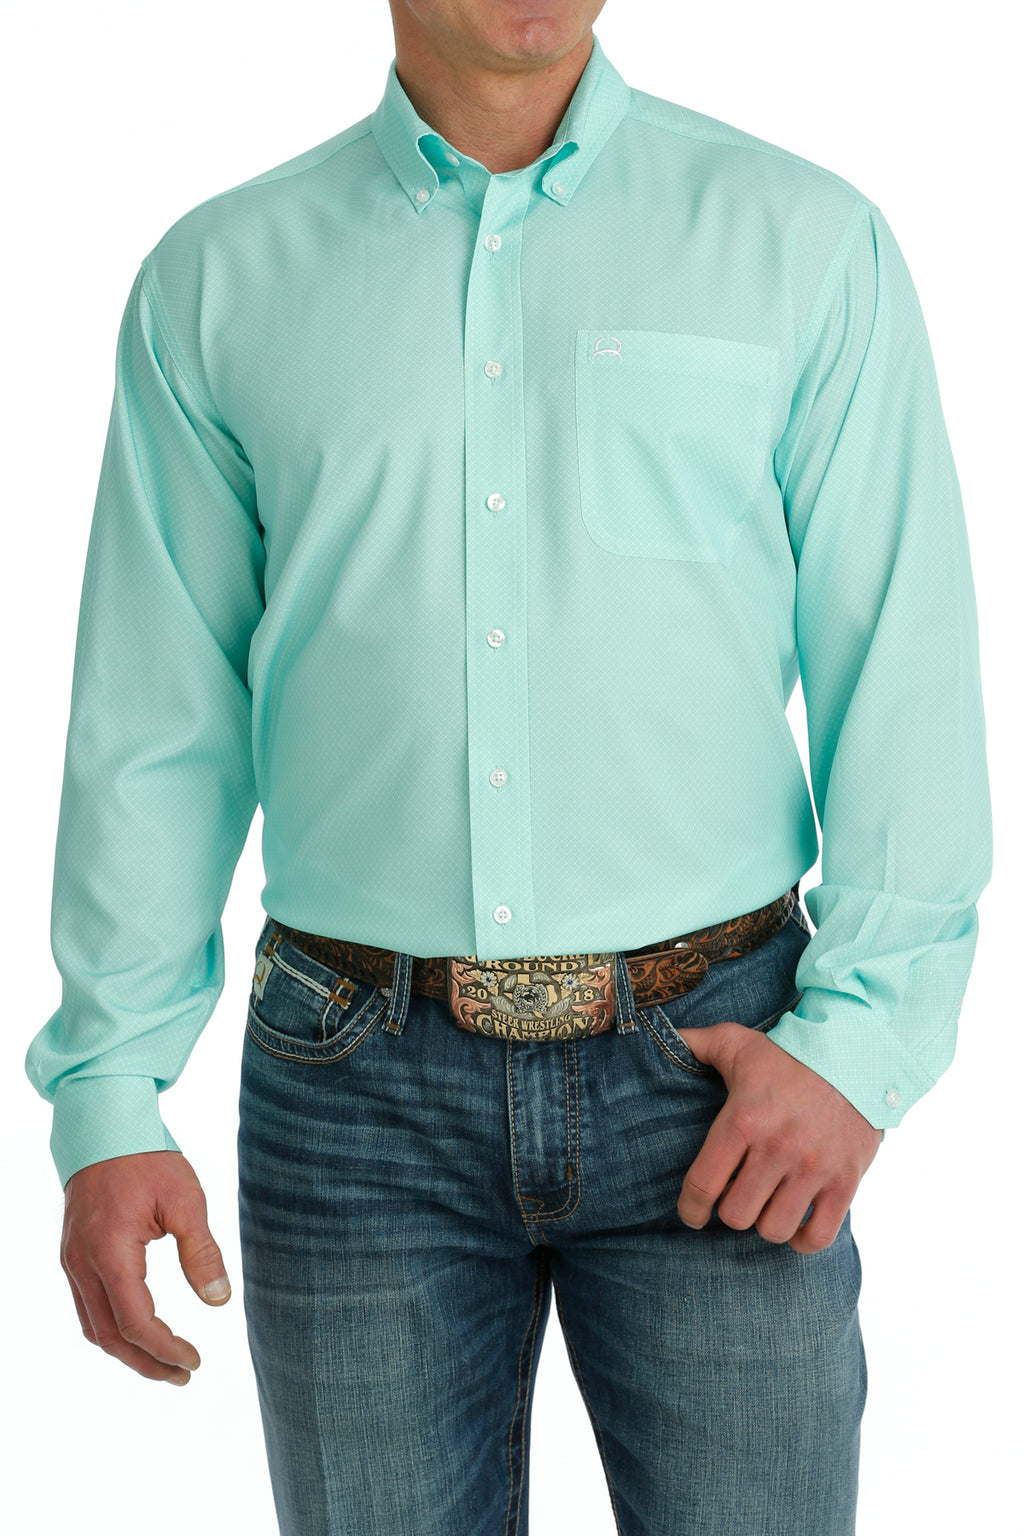 CINCH Men's ARENAFLEX Solid Mint Button-Down Western Shirt